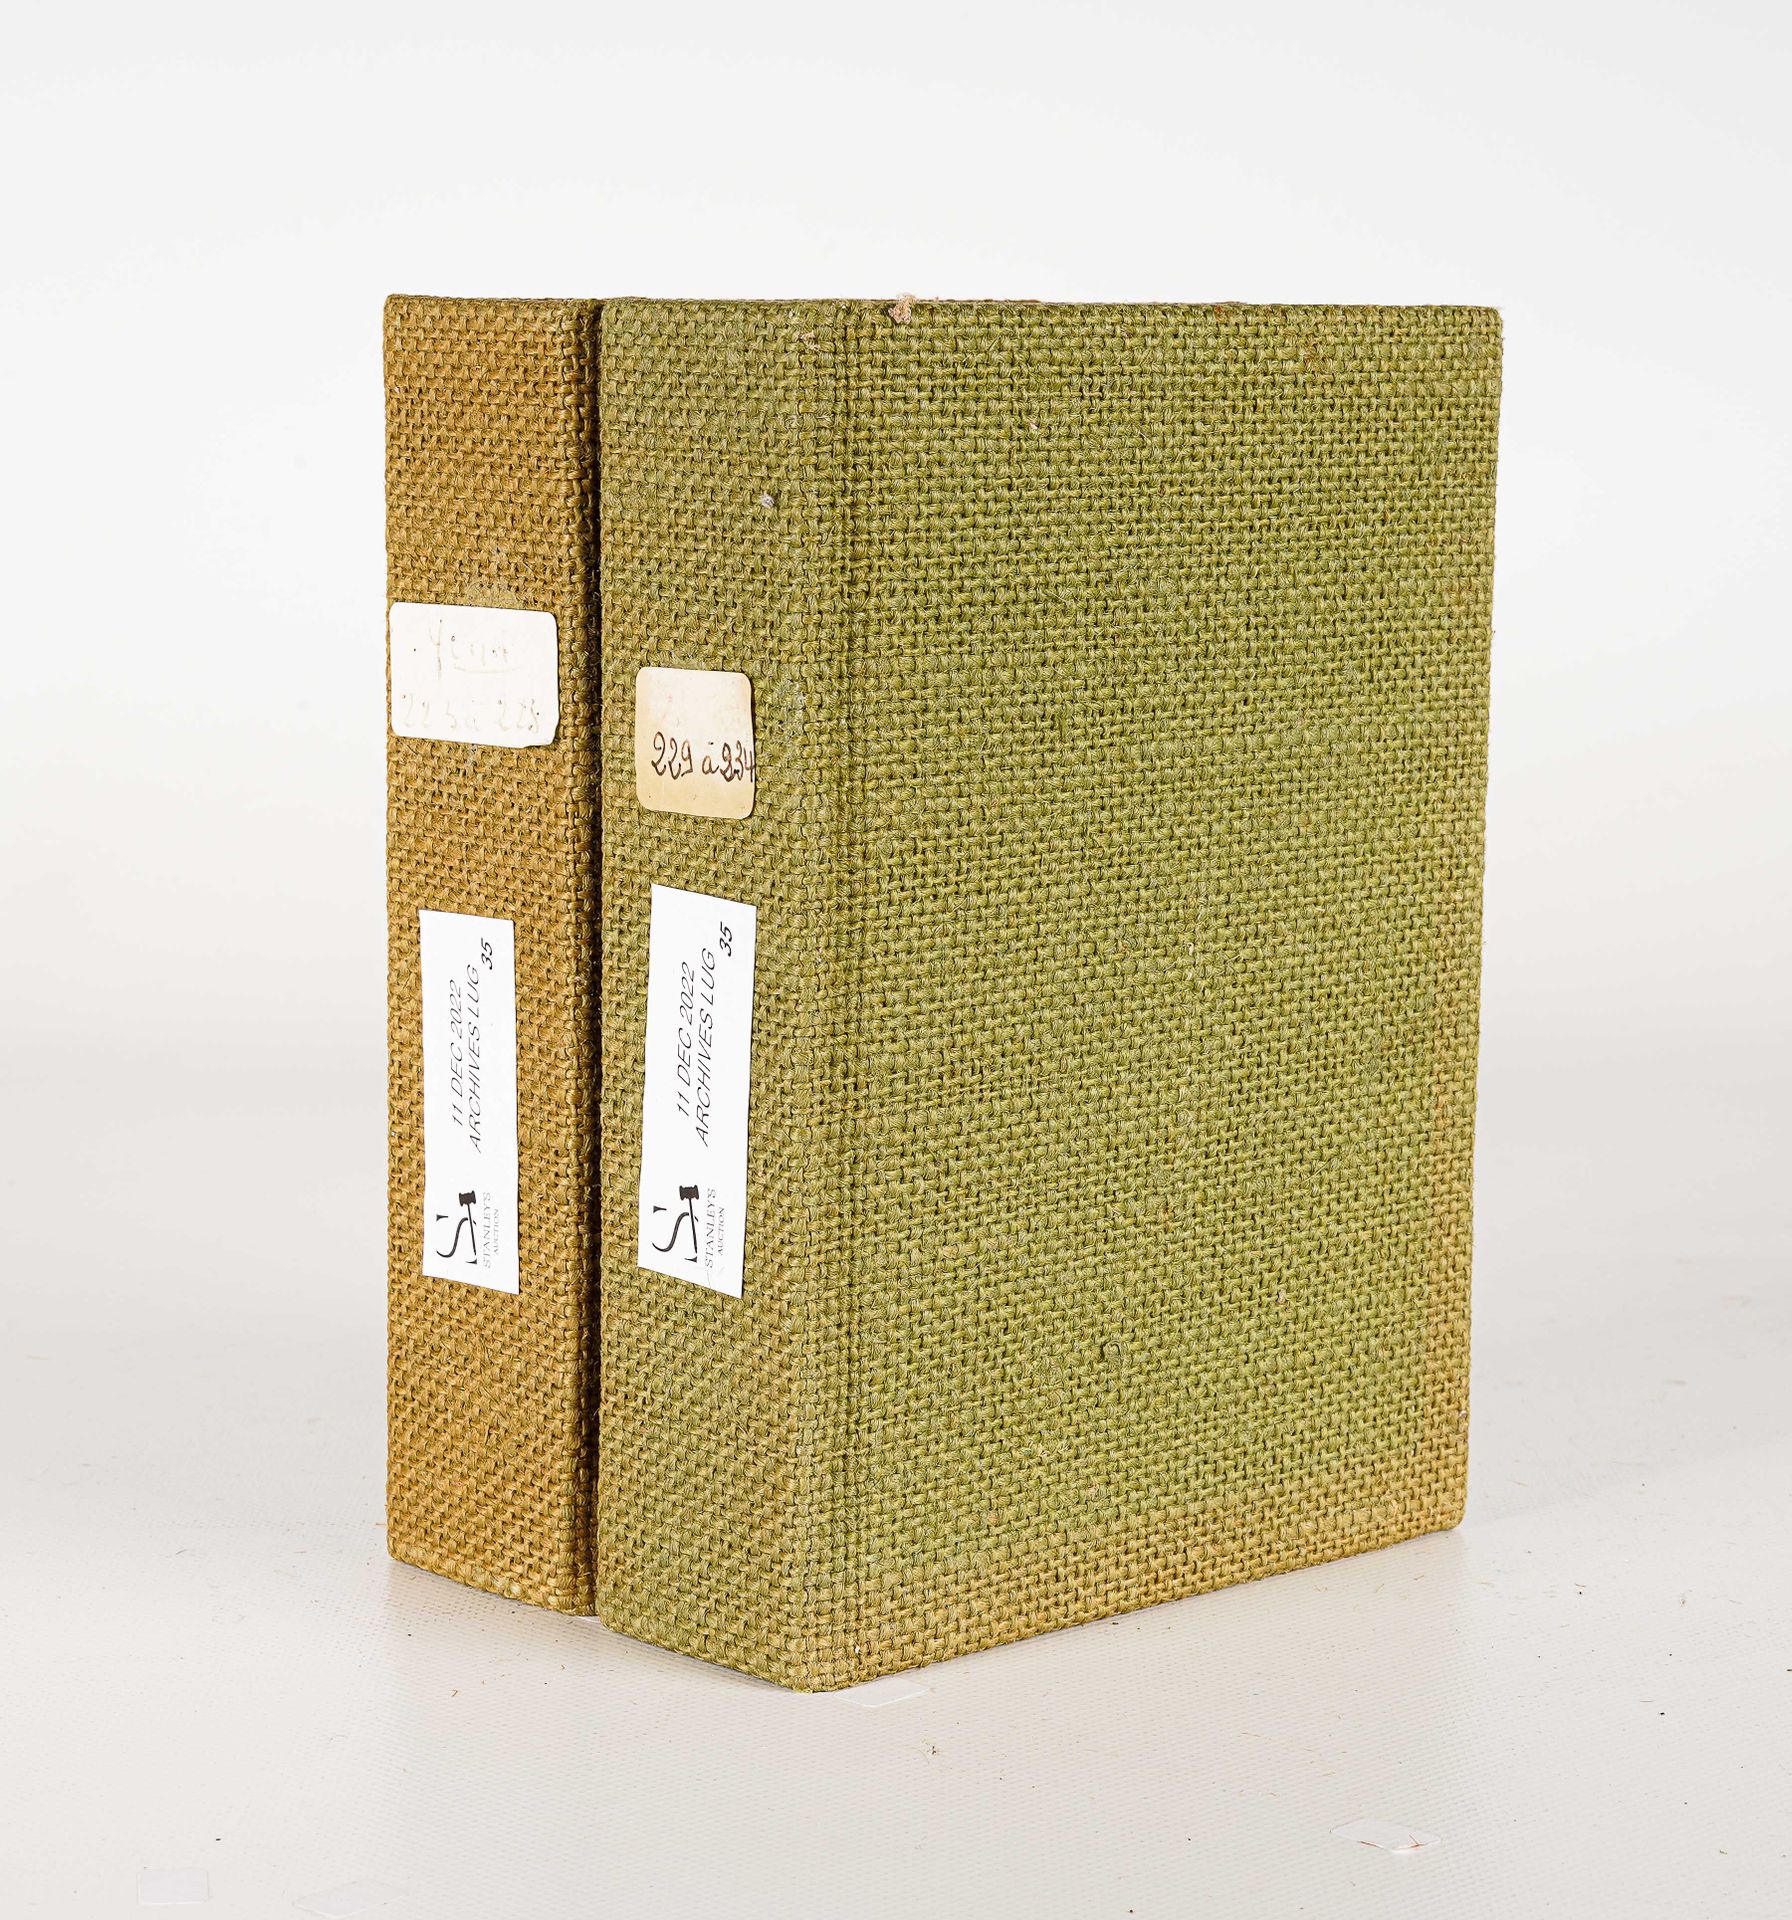 LUG SEMIC, ARCHIVES COMICS 两个LUG活页夹，上面有YUMA第223至234号，绿色布面，尺寸为H 18 x 13厘米